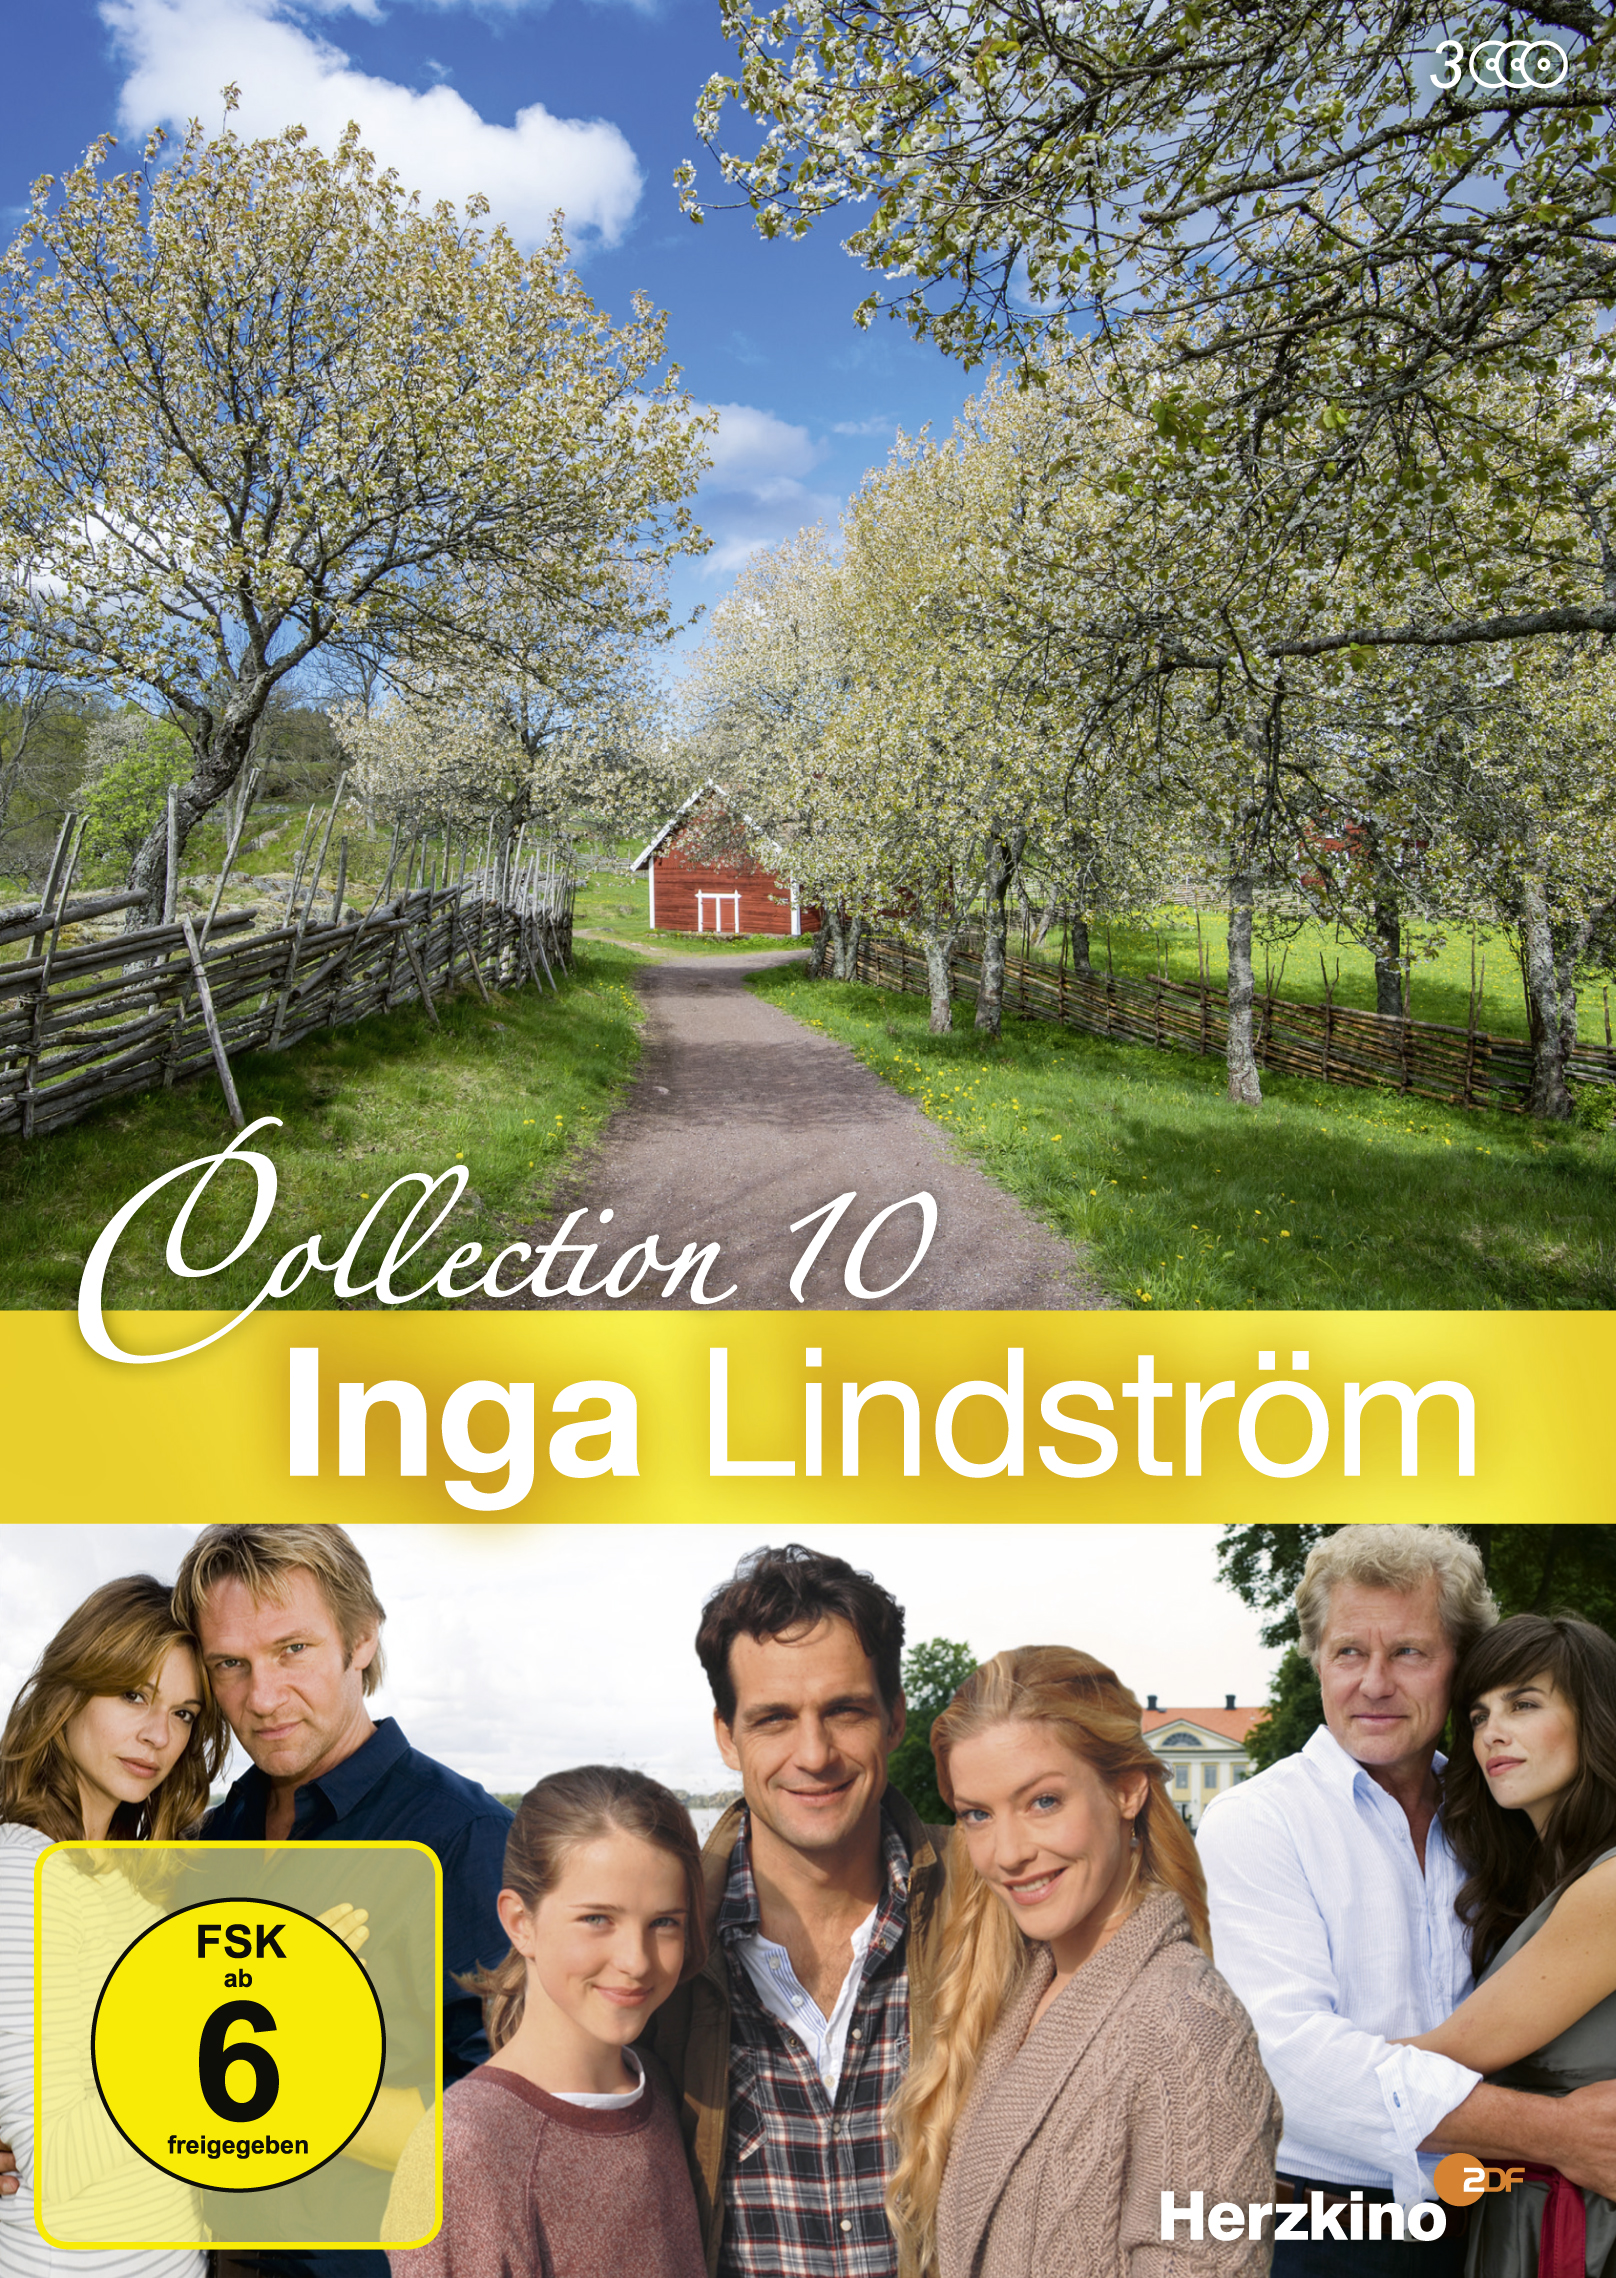 Collection 10 DVD Inga Lindström